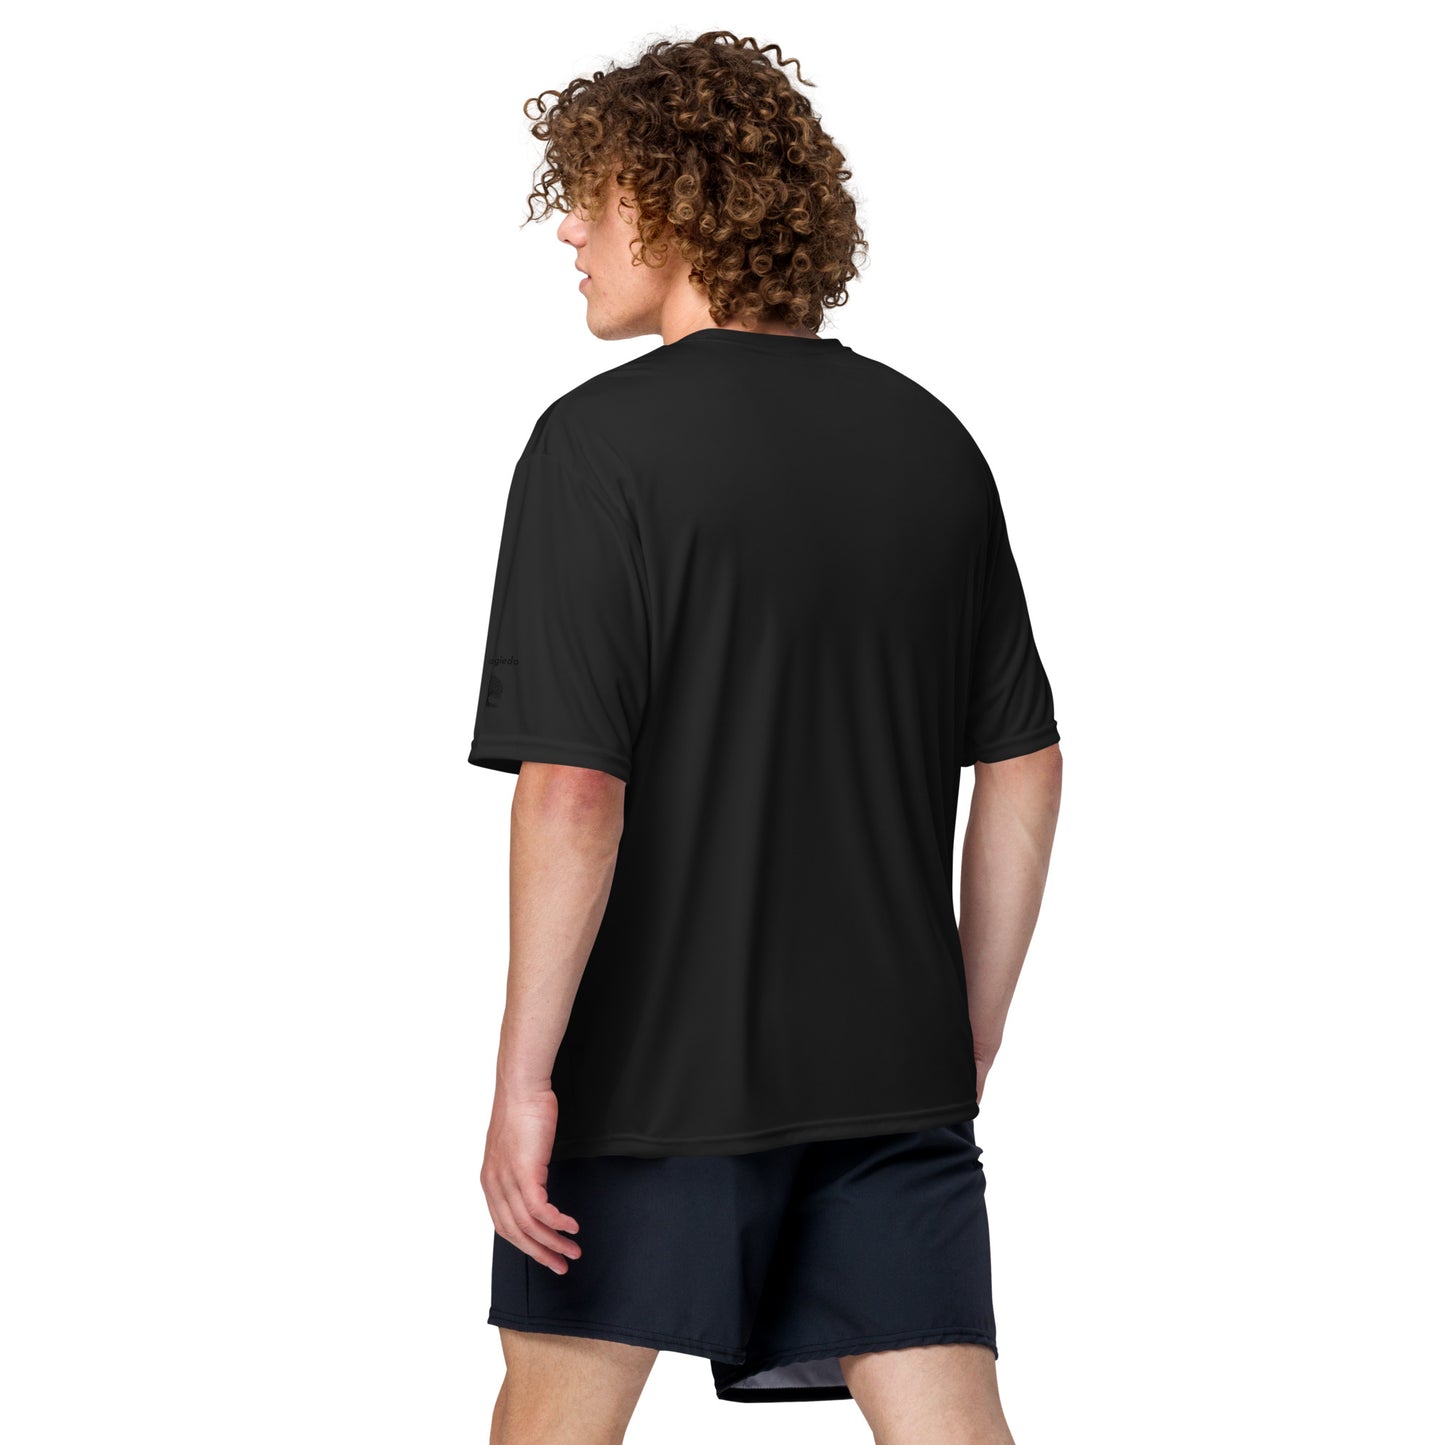 Unisex performance crew neck t-shirt - Pickleball (Black)